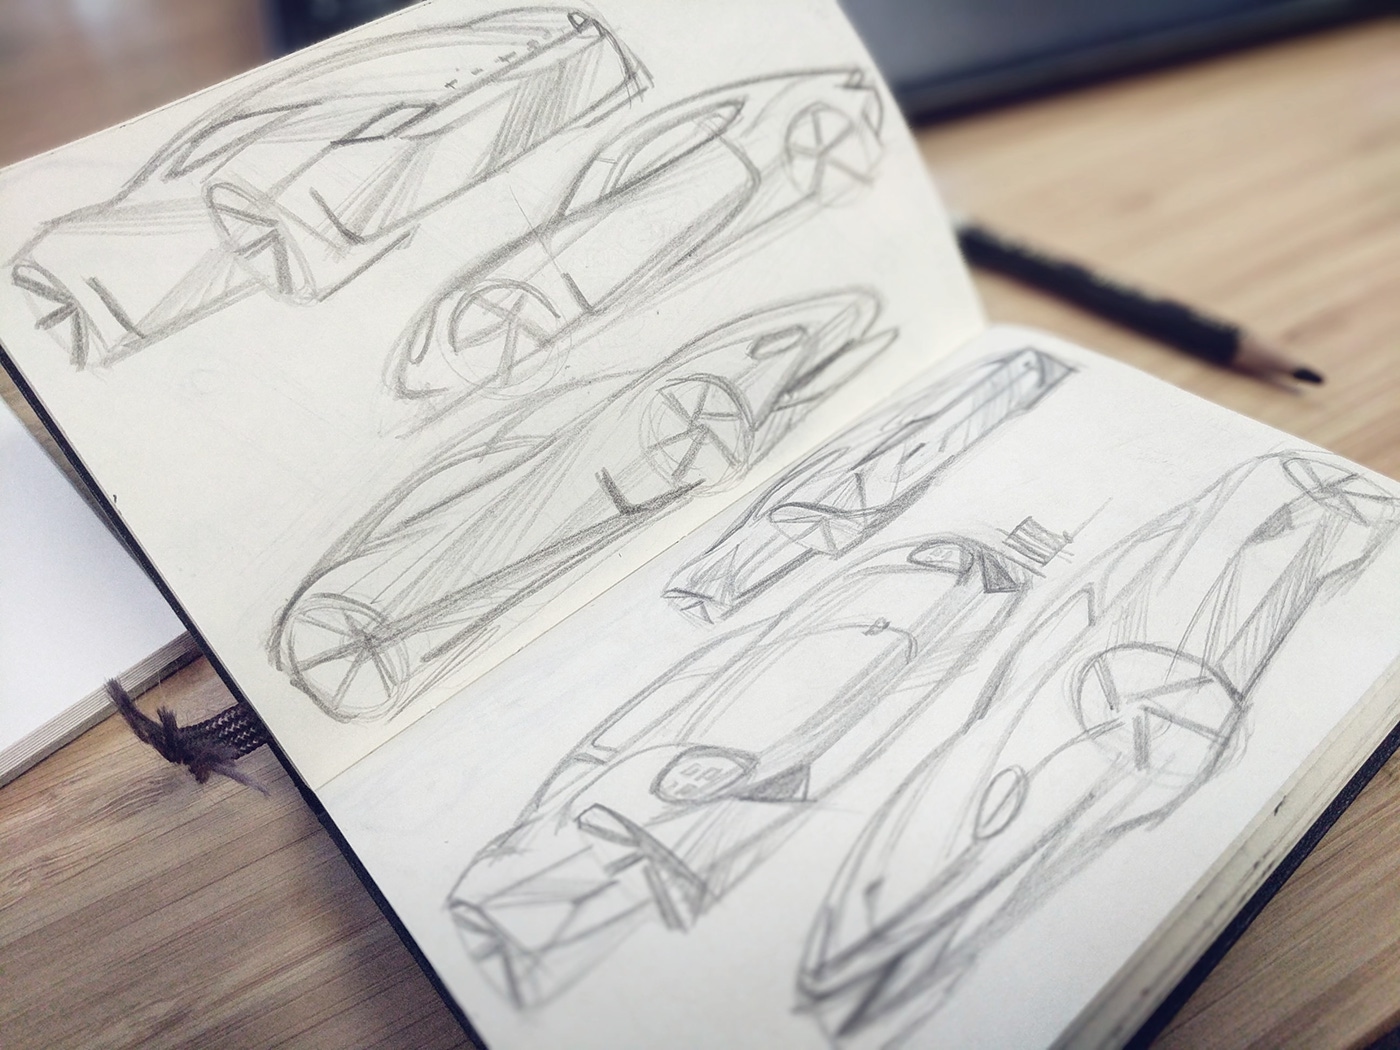 design sketch sketchbook sketchaday cardesign automotive   idsketches transportationdesign Transdesign dailysketches